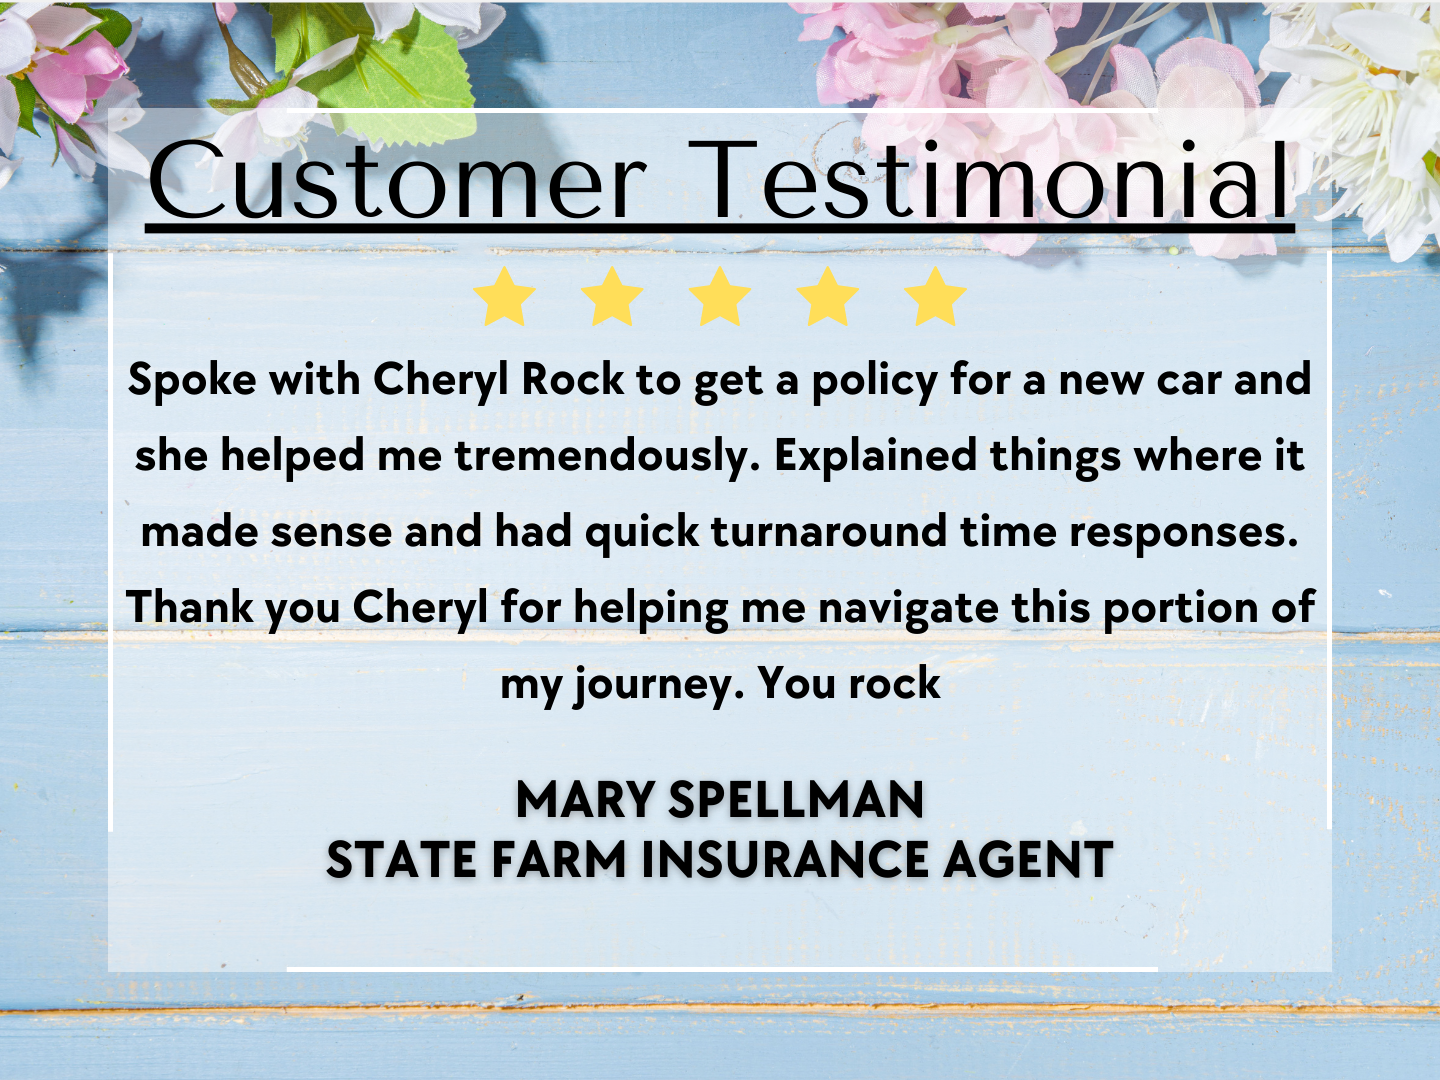 Mary Spellman - State Farm Insurance Agent